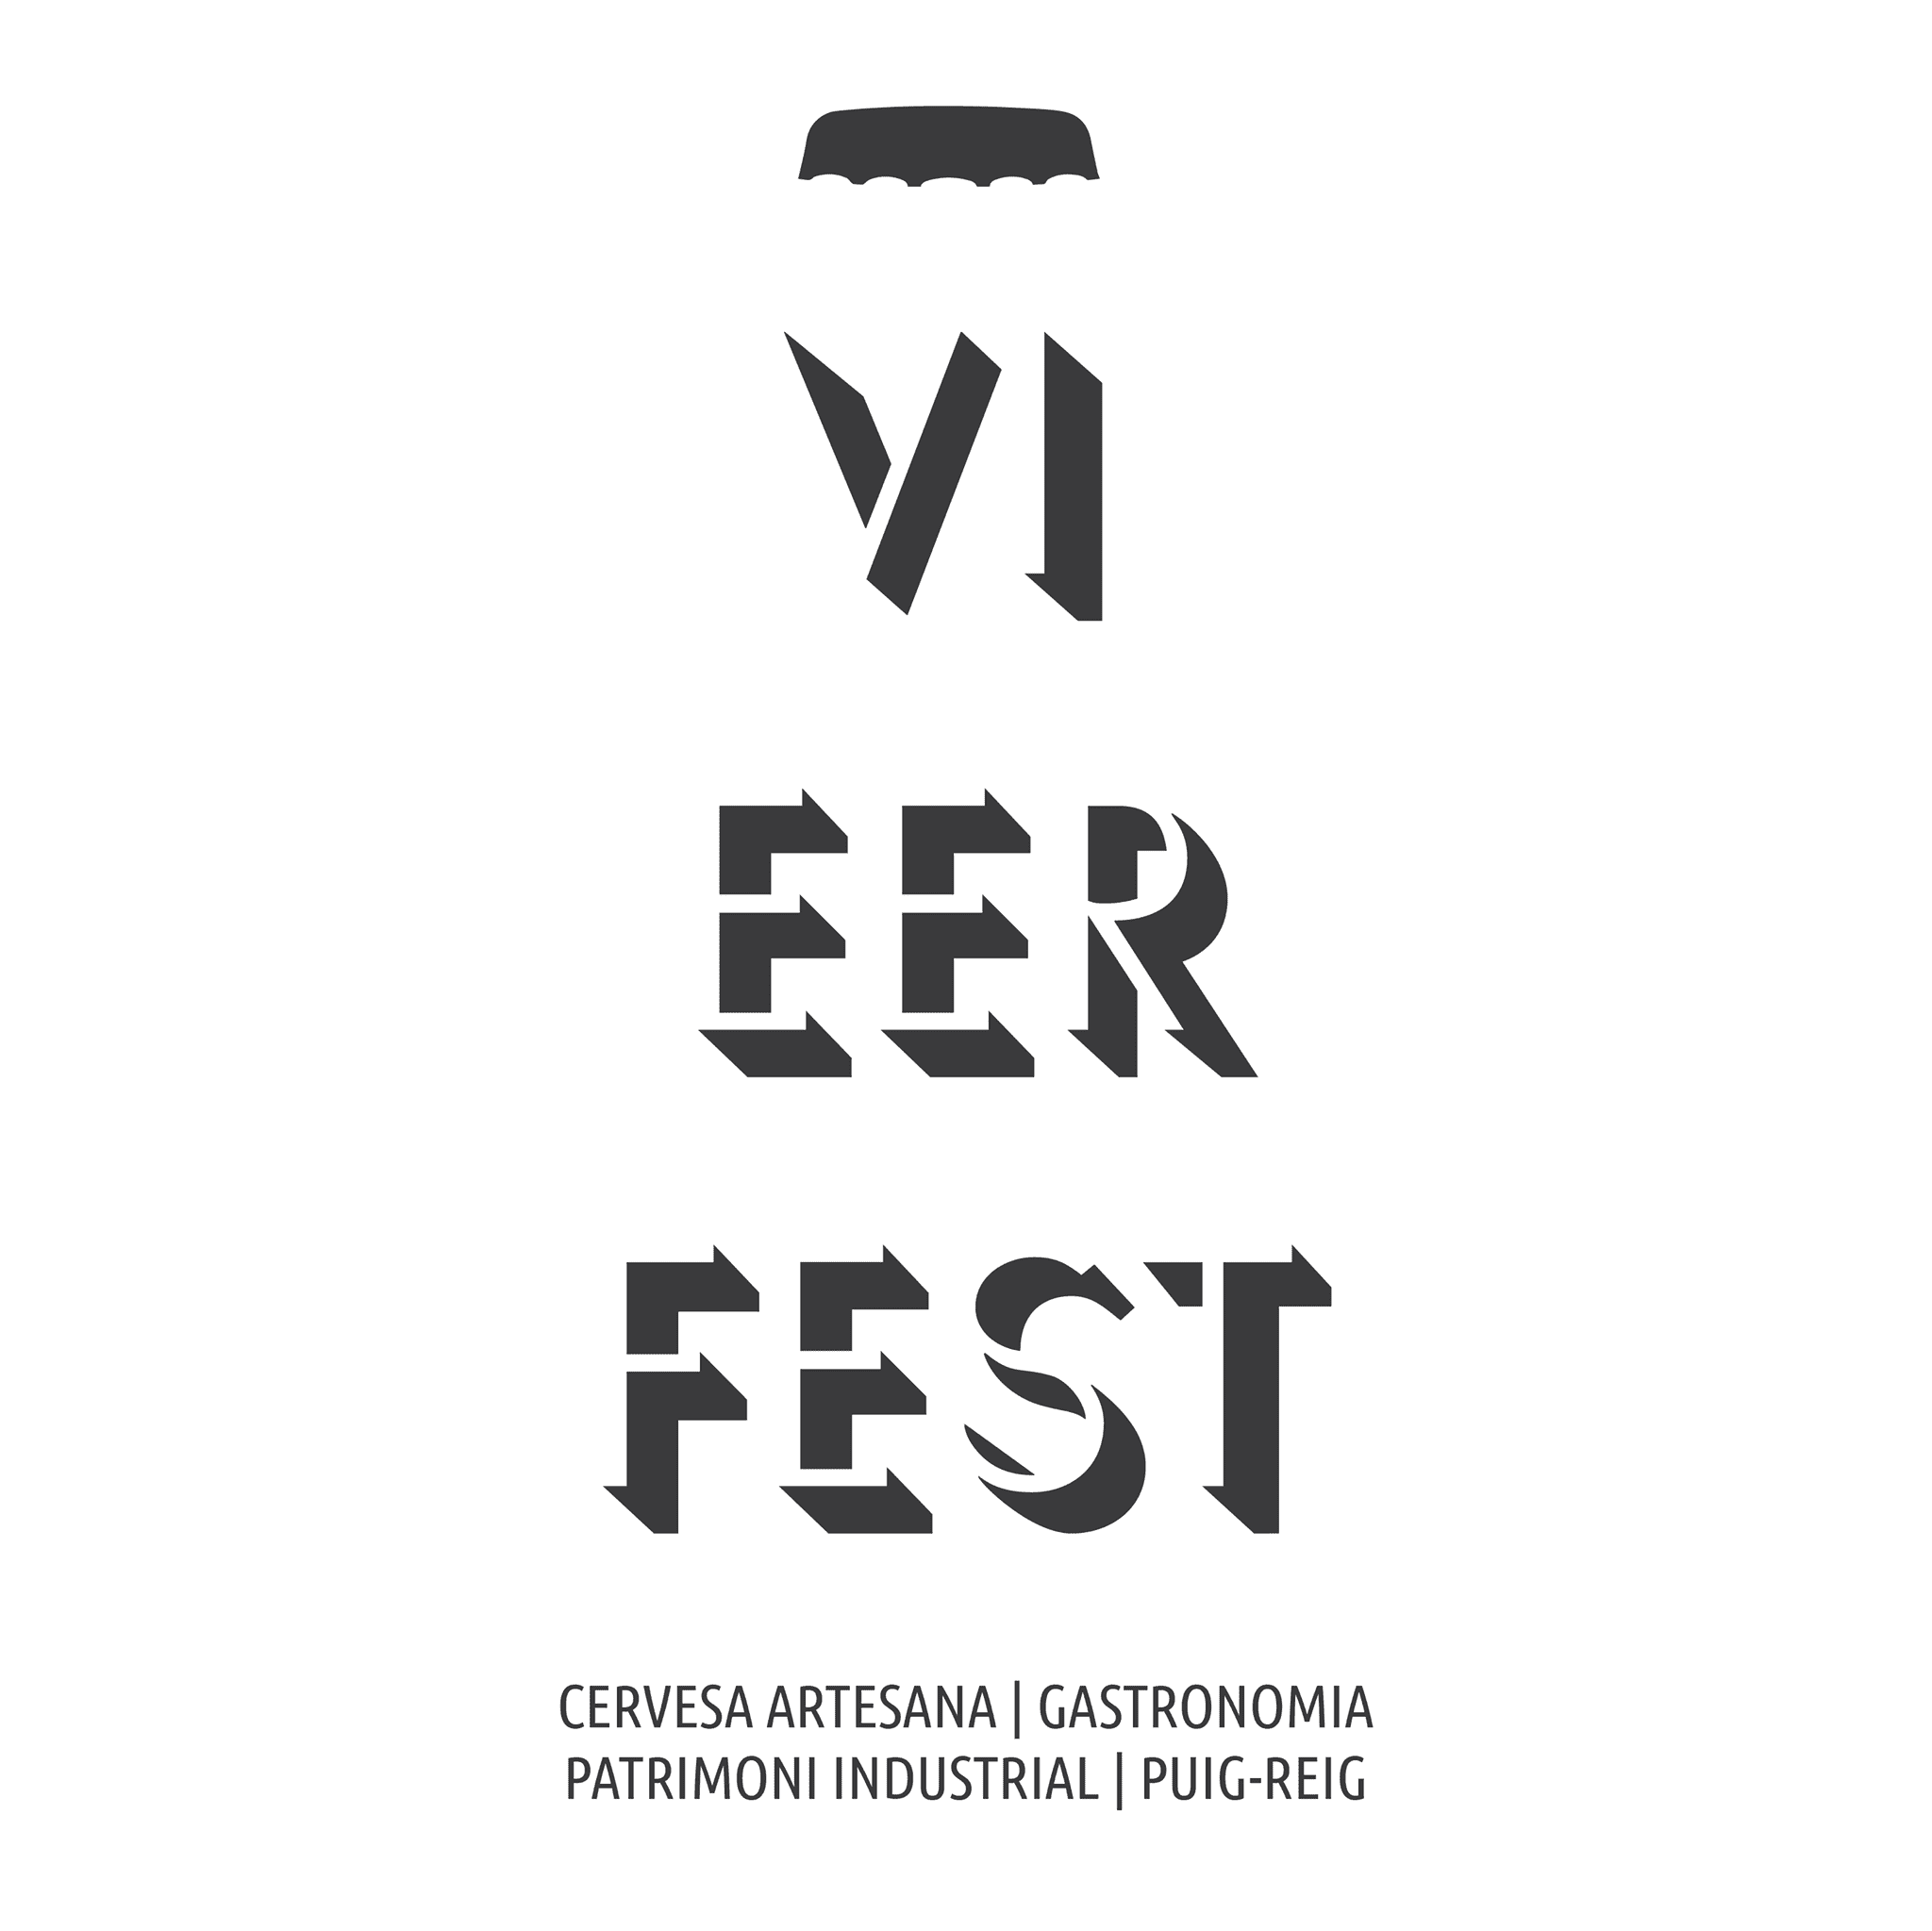 Vieer Fest Puig-reig 2022